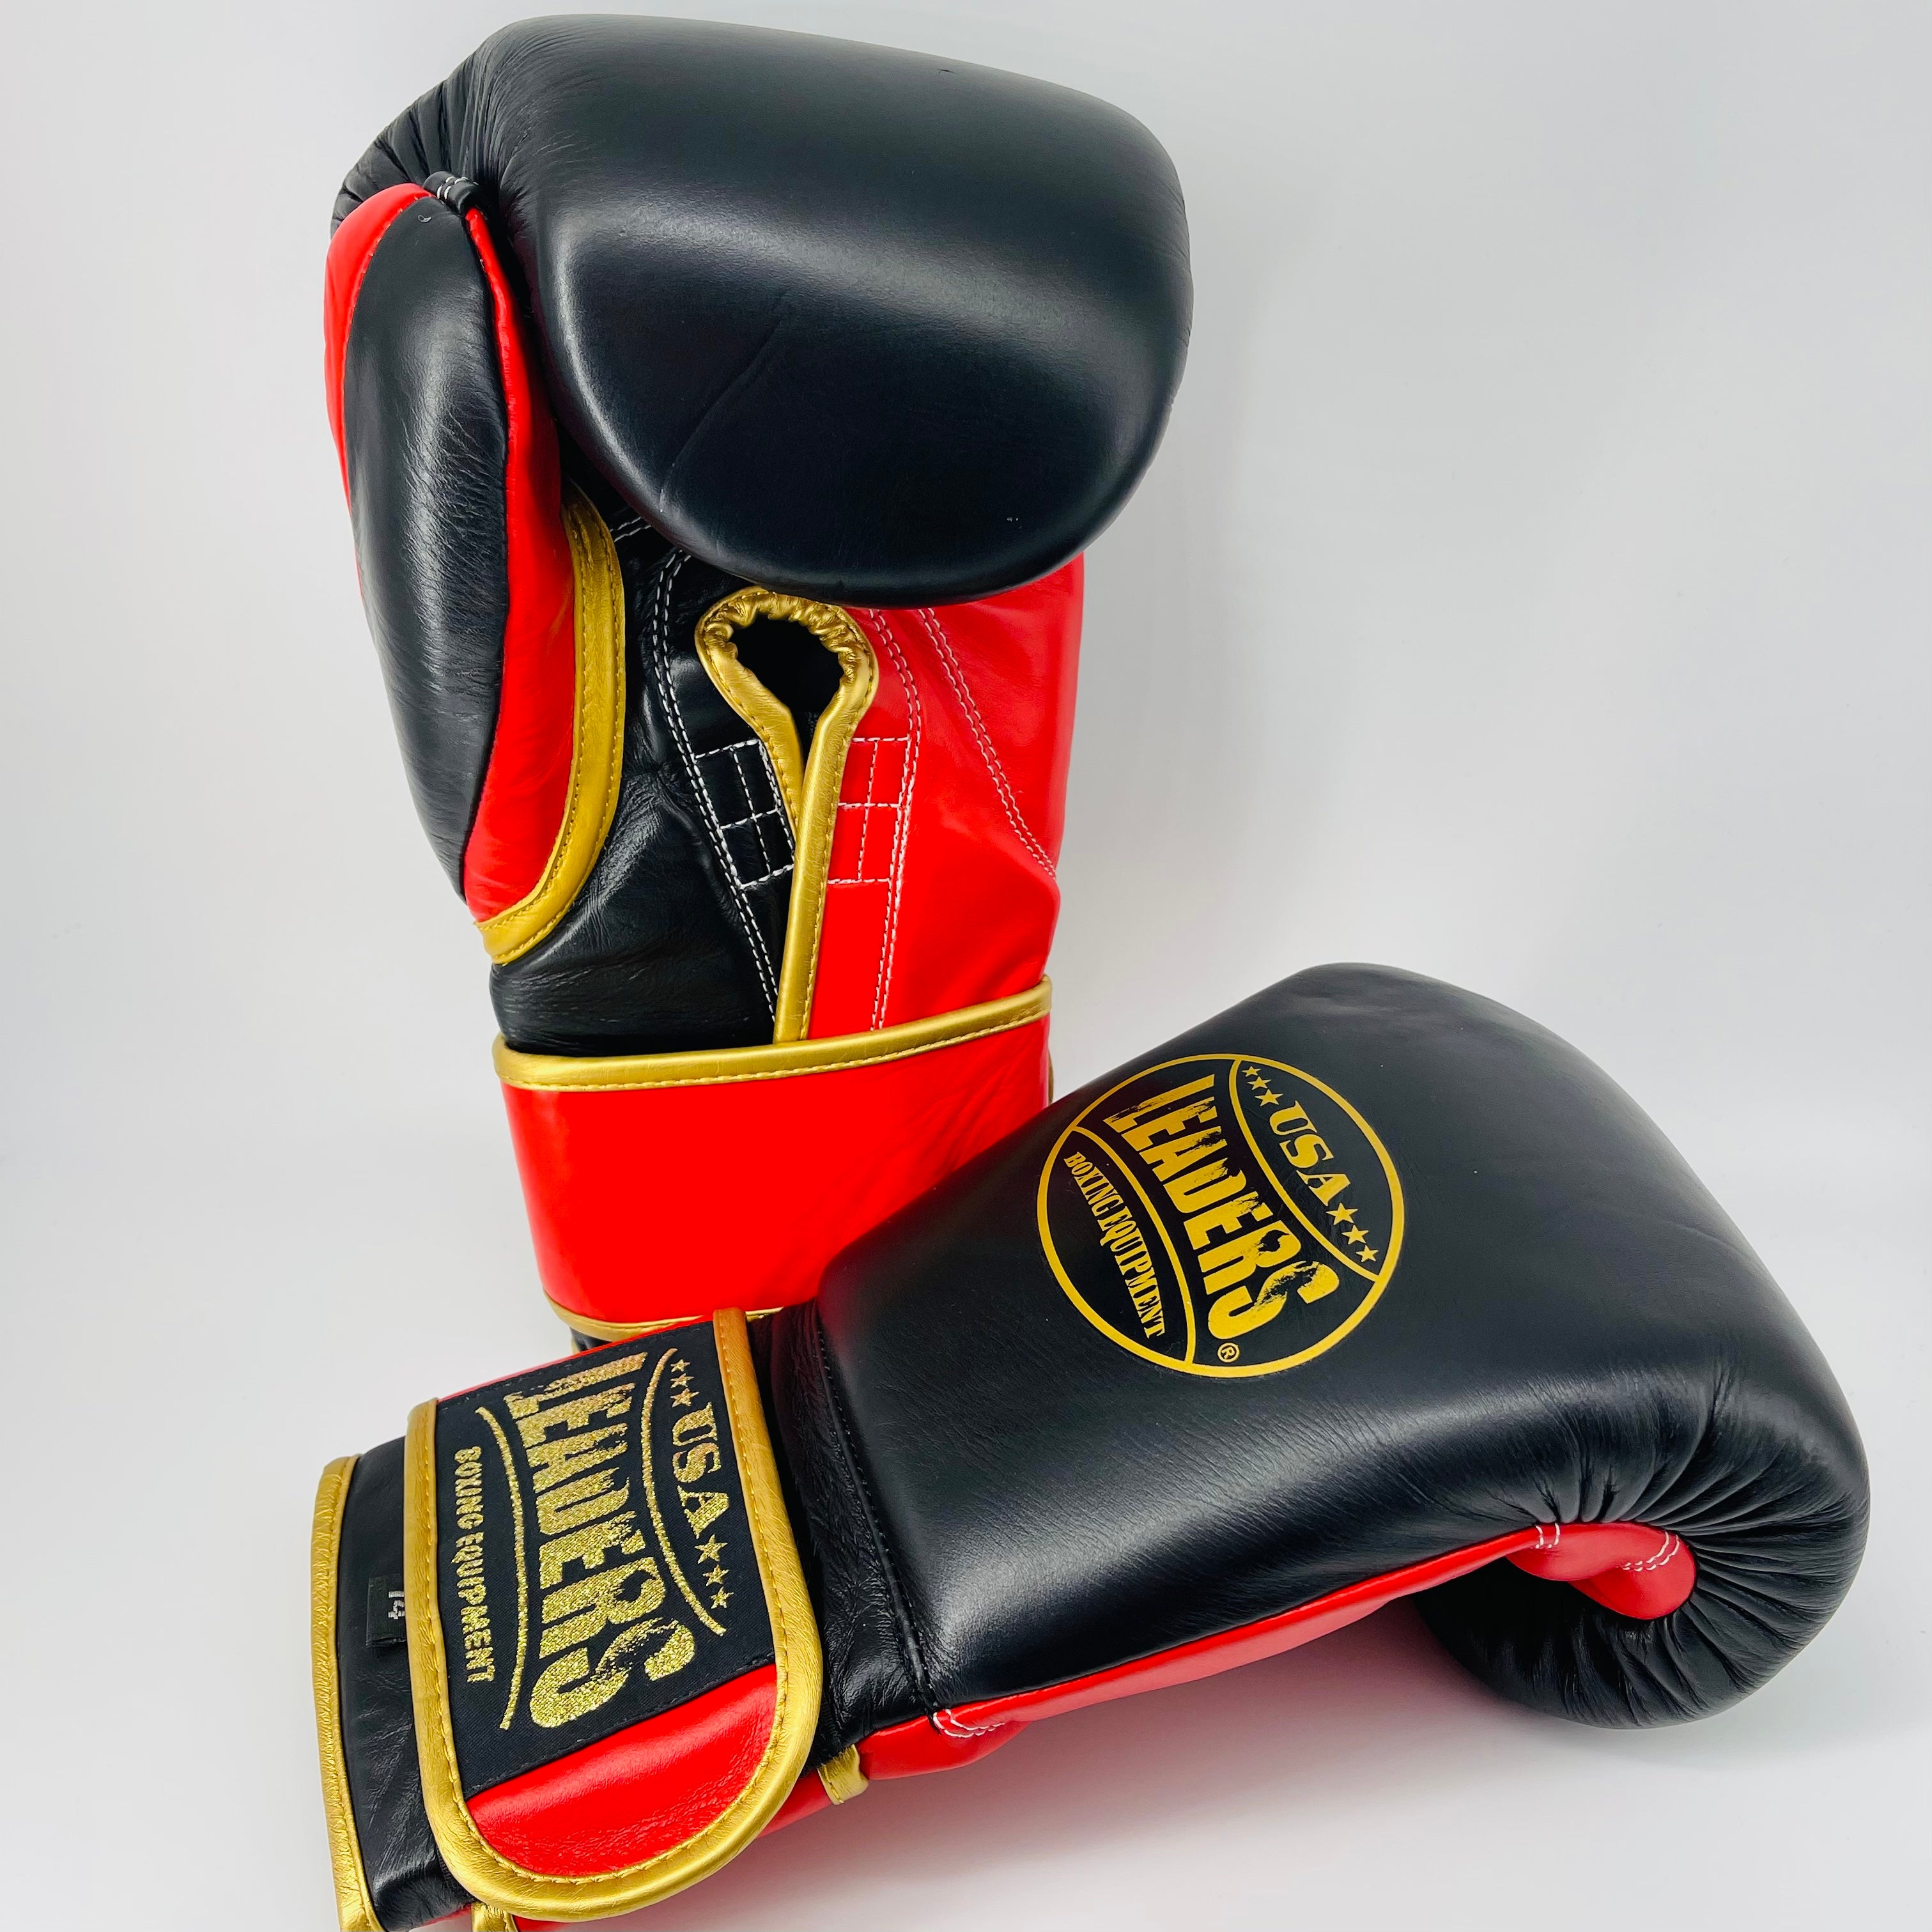 Elite Soft Boxing Gloves (Black/Red/Gold)